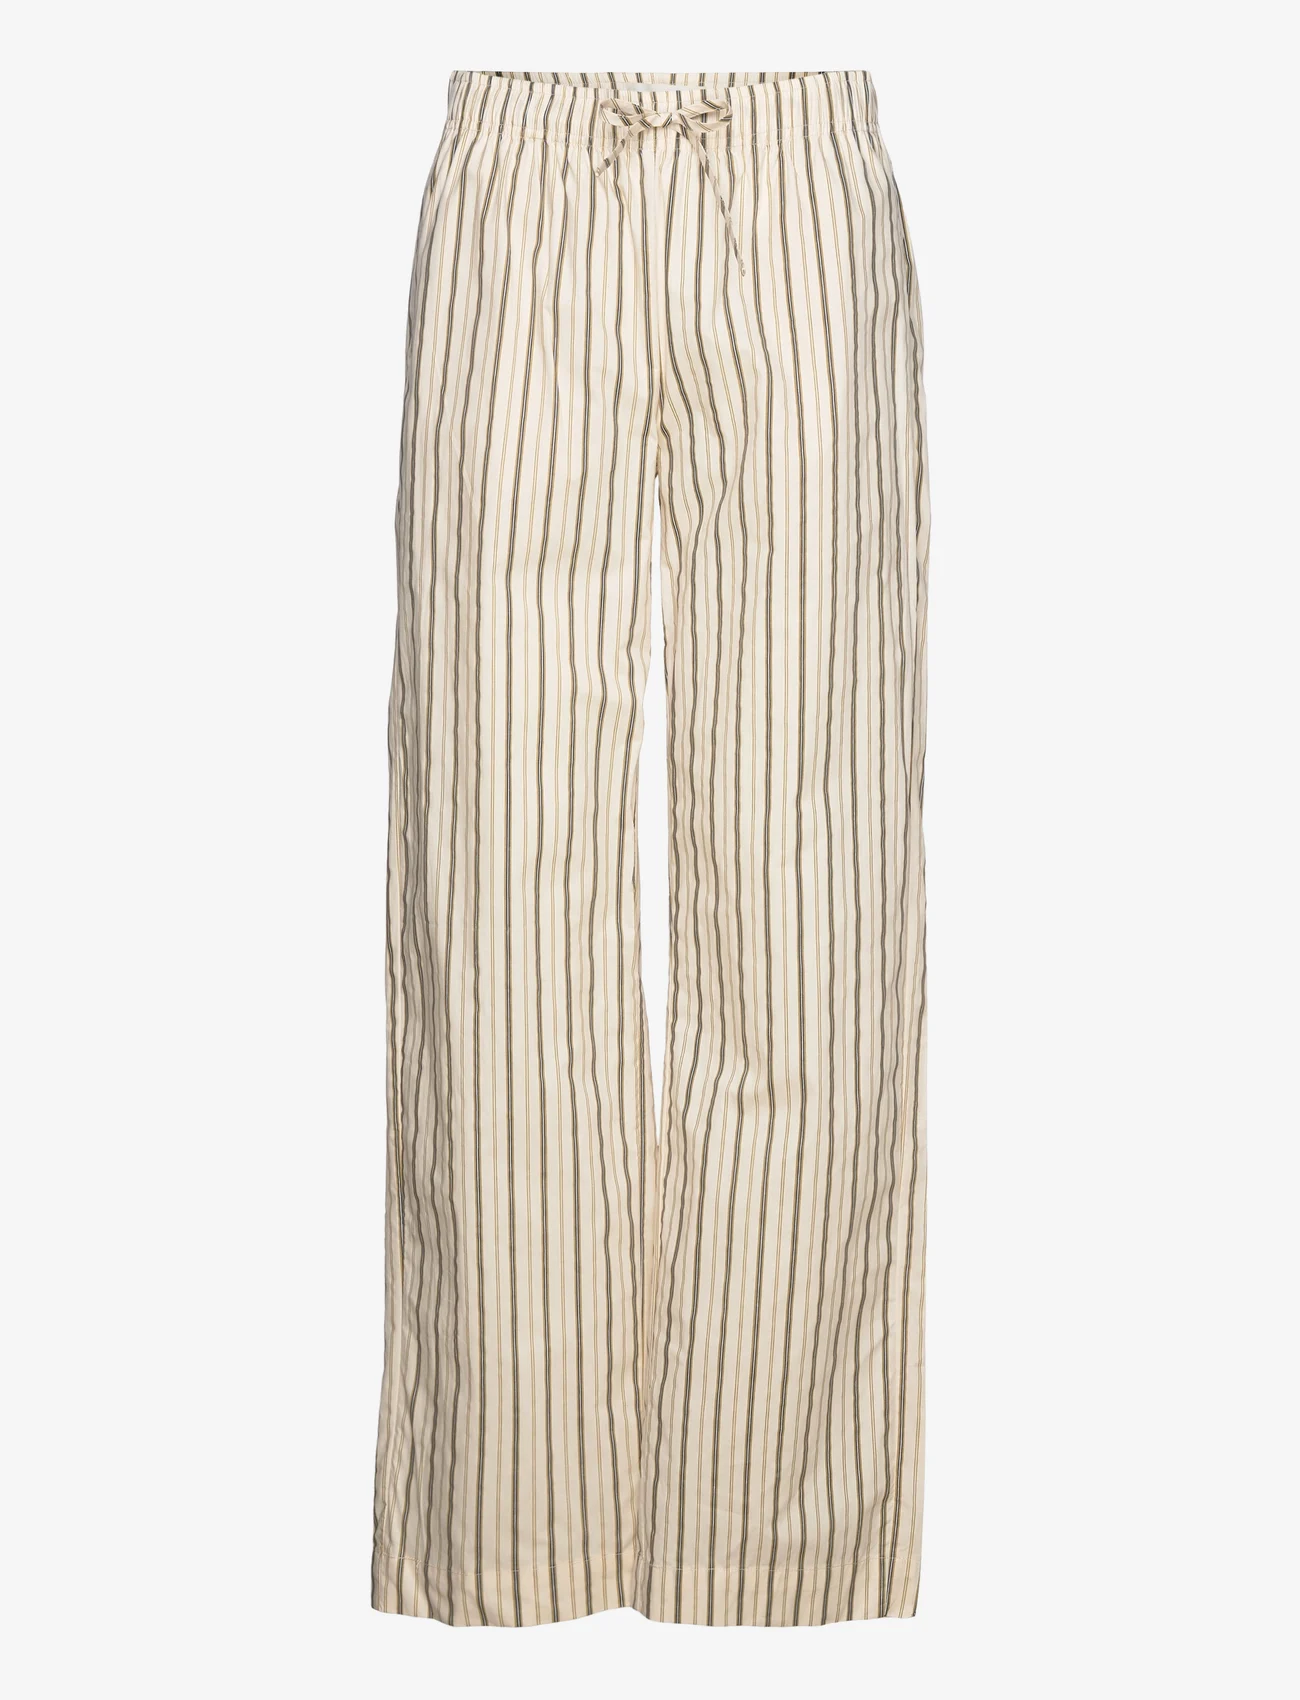 Sofie Schnoor - Trousers - leveälahkeiset housut - off white striped - 0